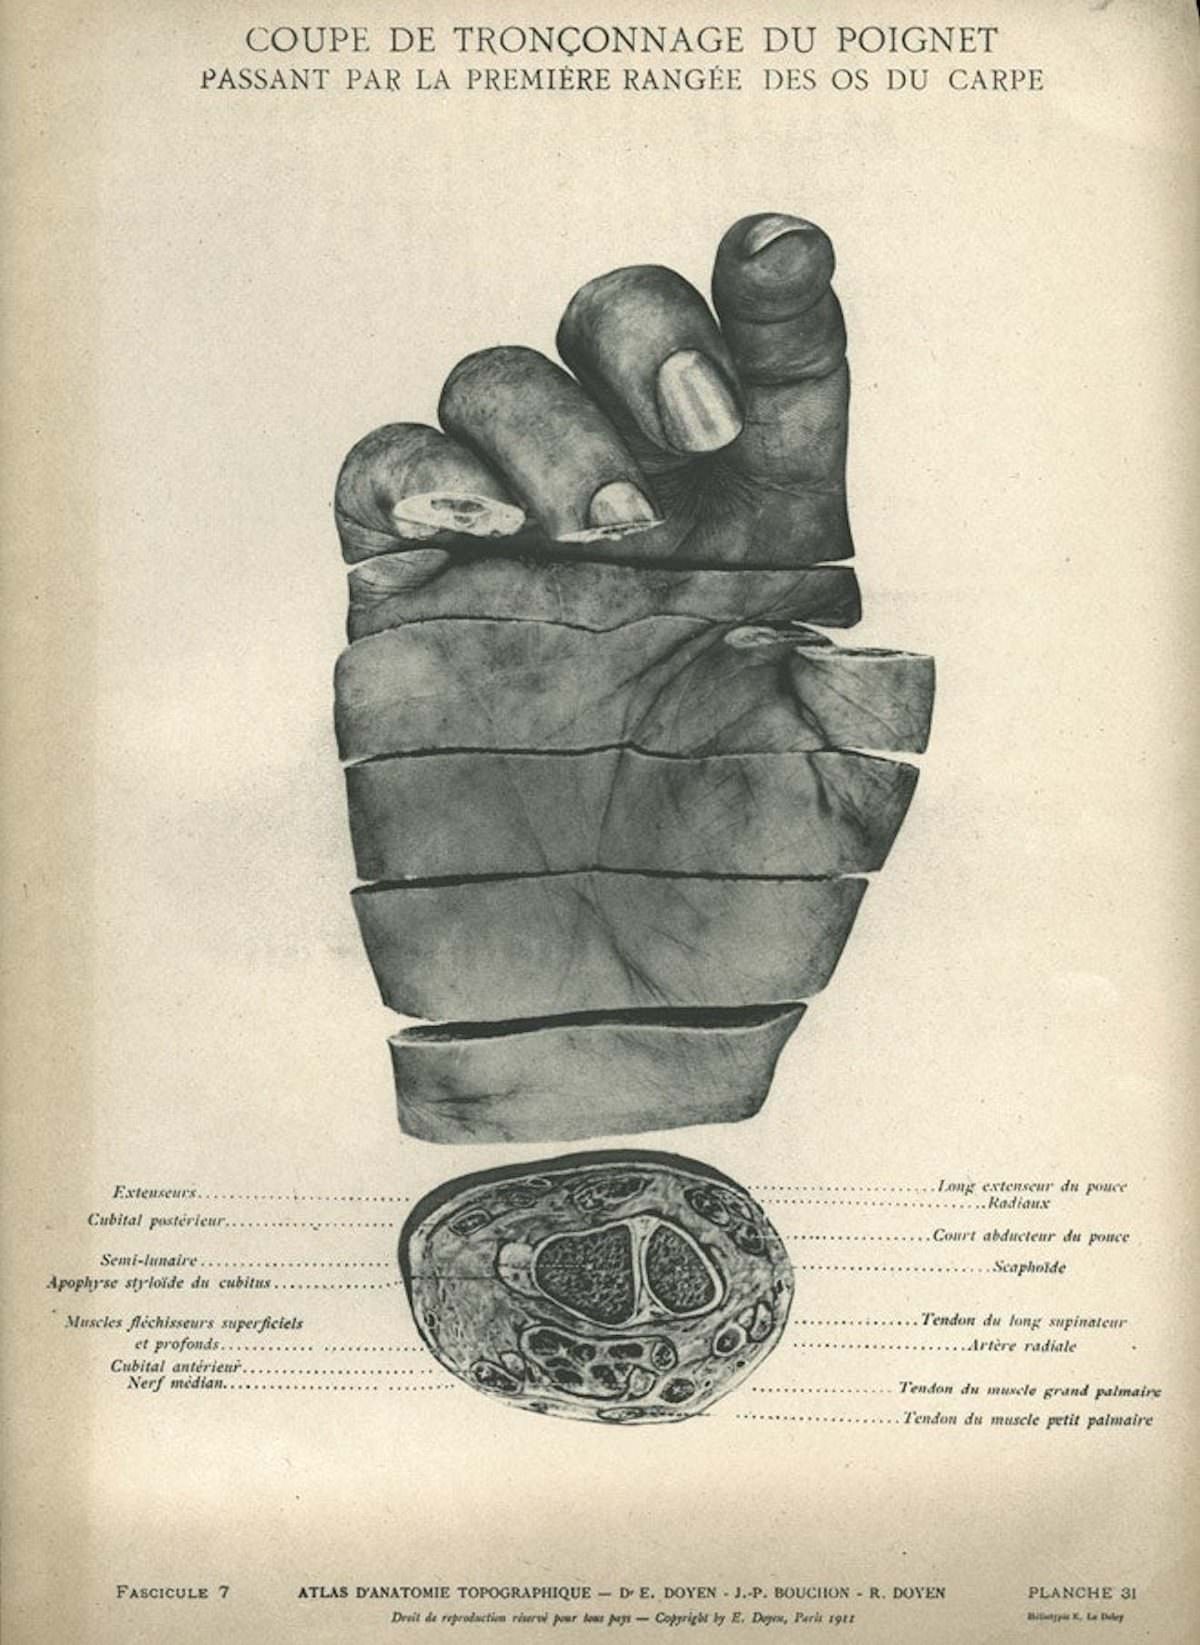 Atlas of Topographic Anatomy (1911) by Eugène-Louis Doyen with J-P. Bouchon and R. Doyen